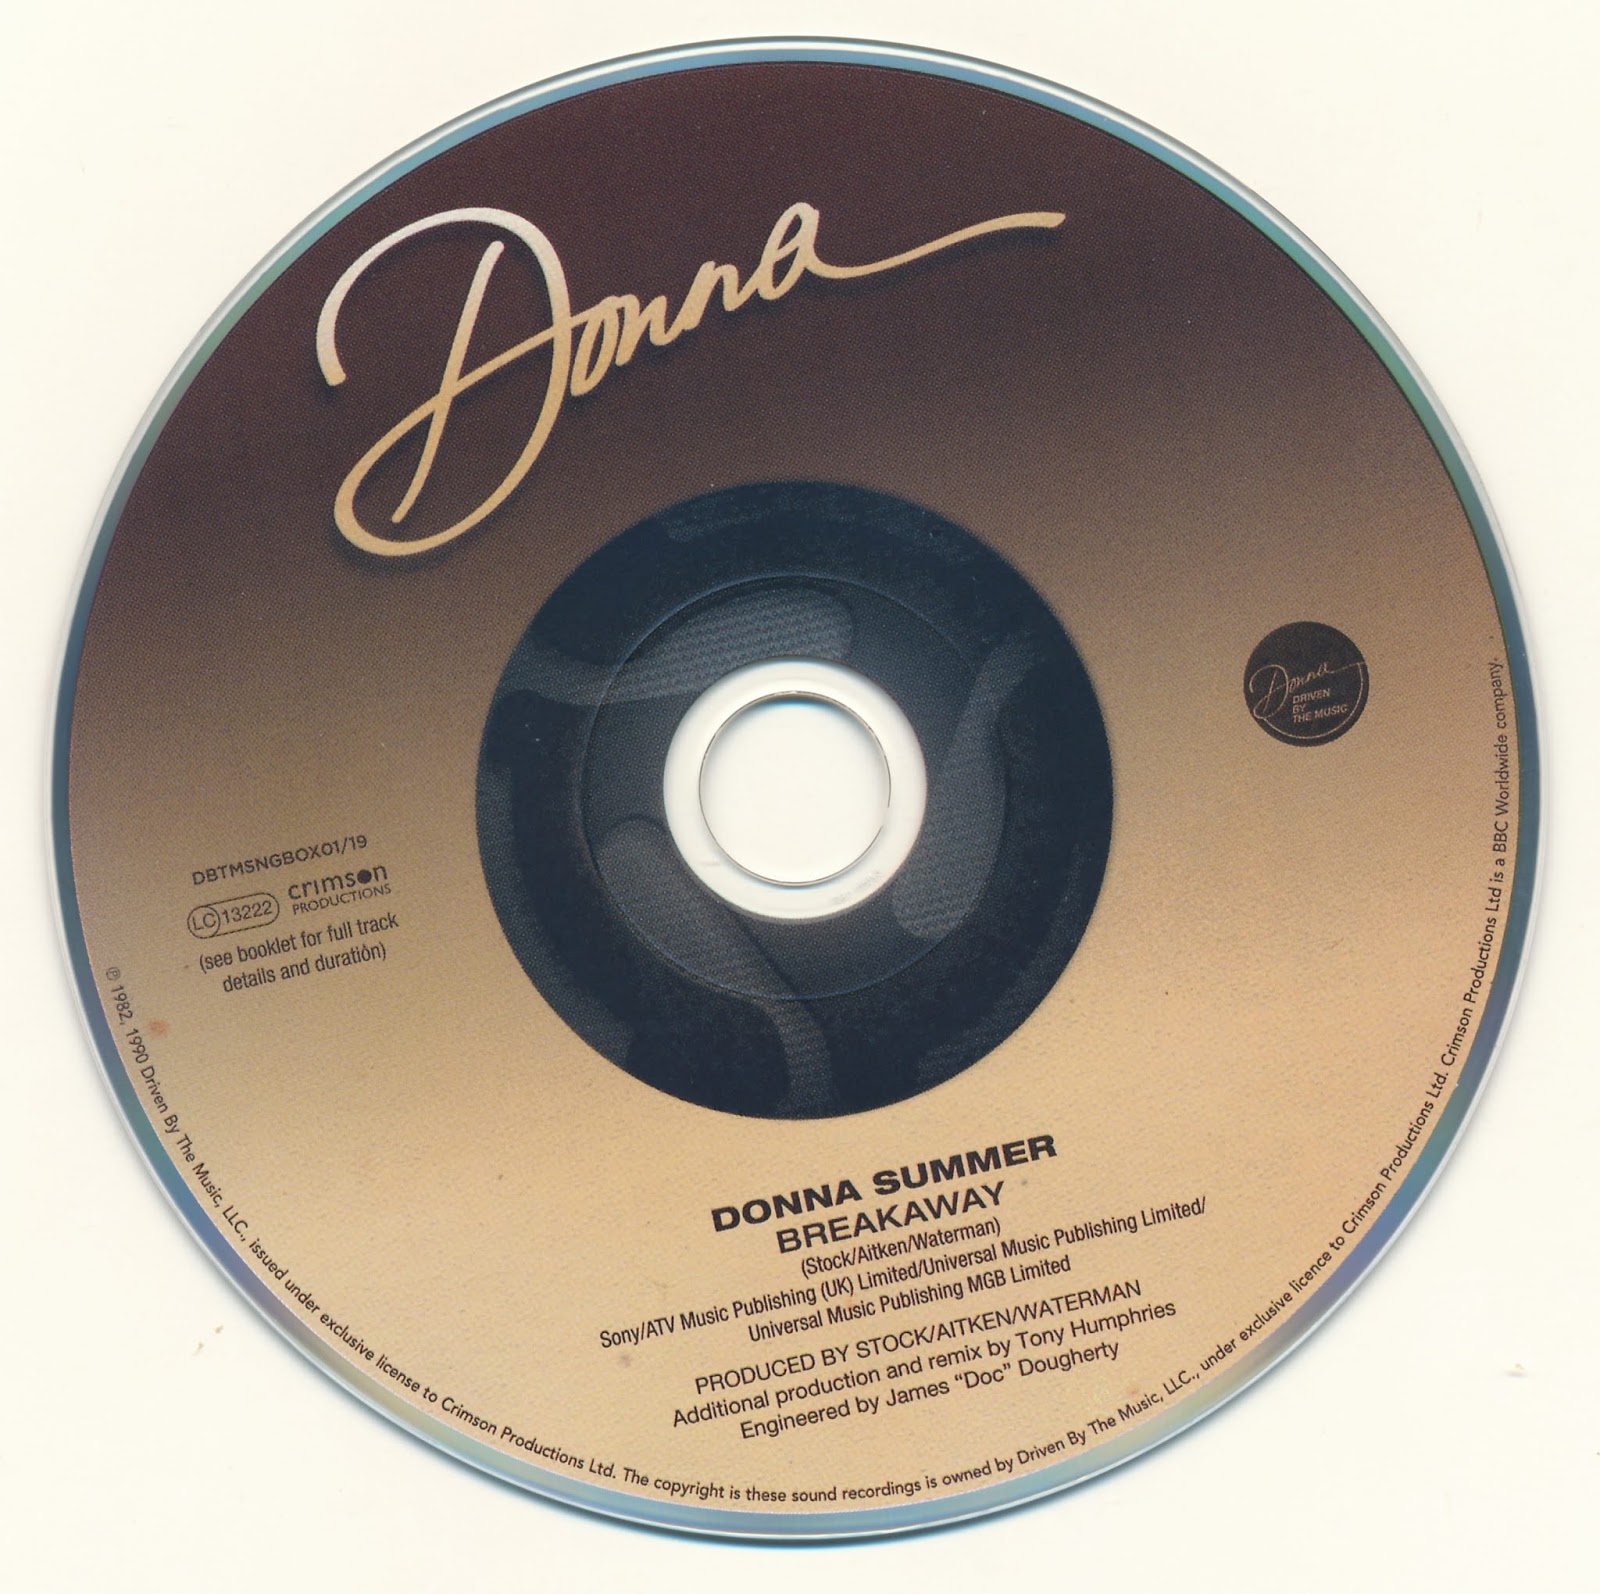 Ай фил лов. Donna Summer 1982 альбом. Singles диск. The Wanderer Донна саммер. Breakaway Donna Summer.